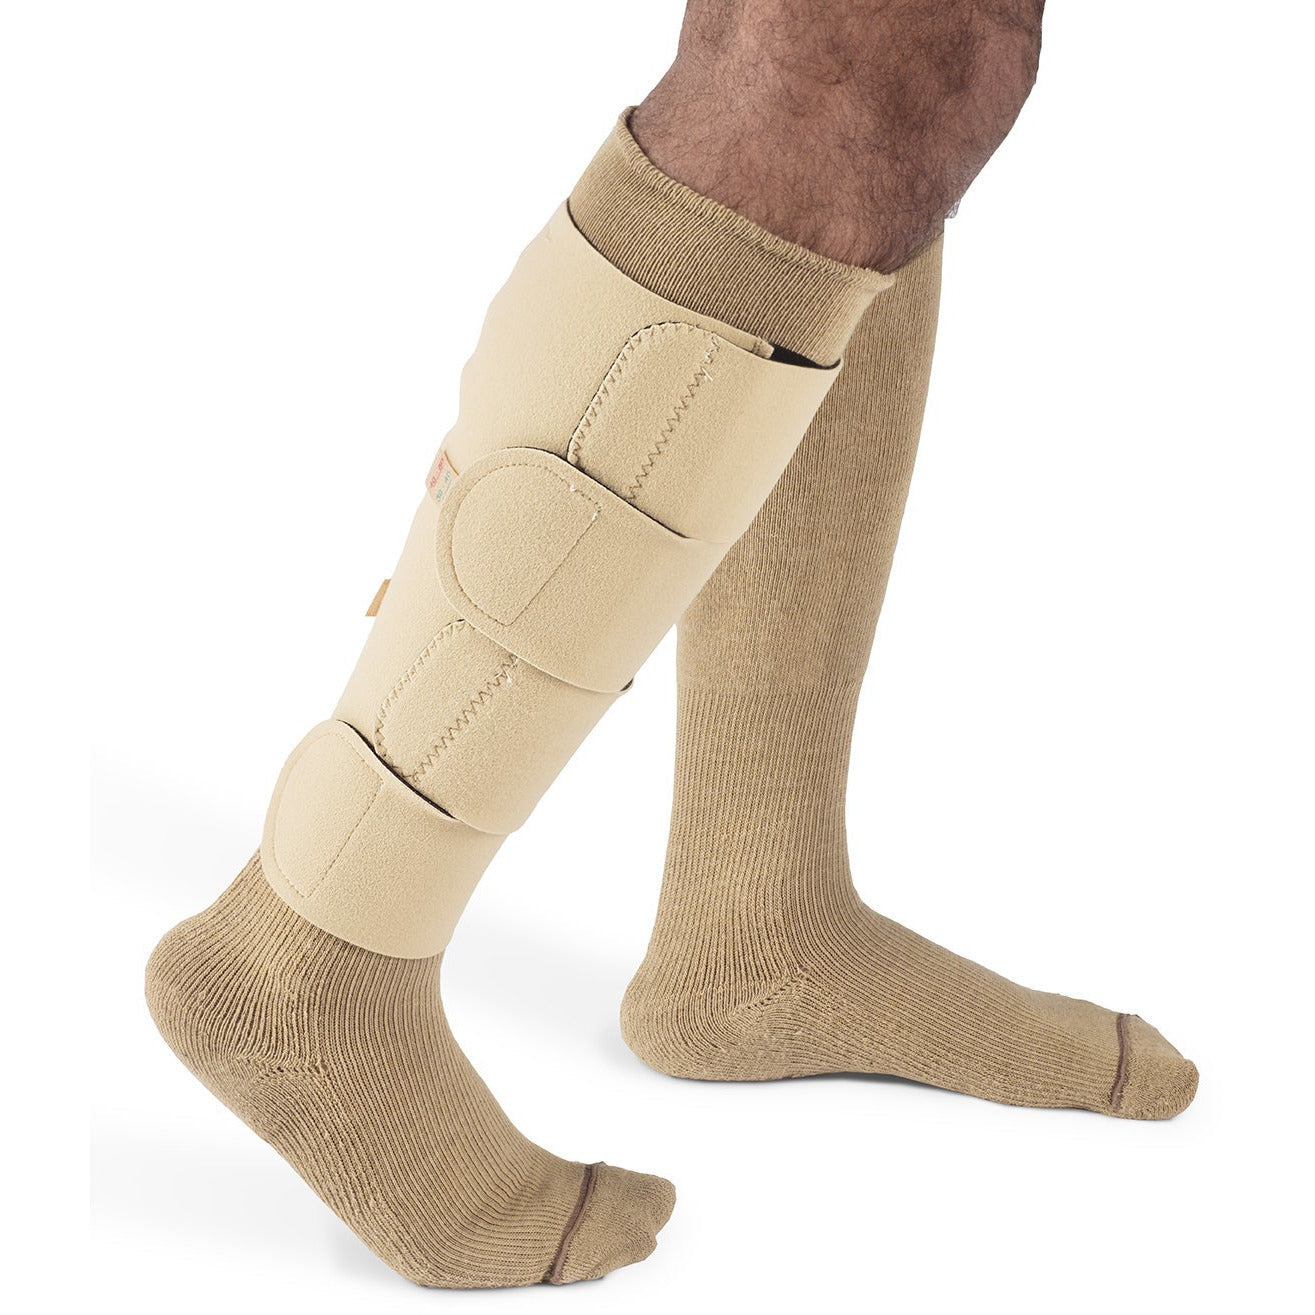 circaid juxatalite HD Lower Leg Compression Wrap